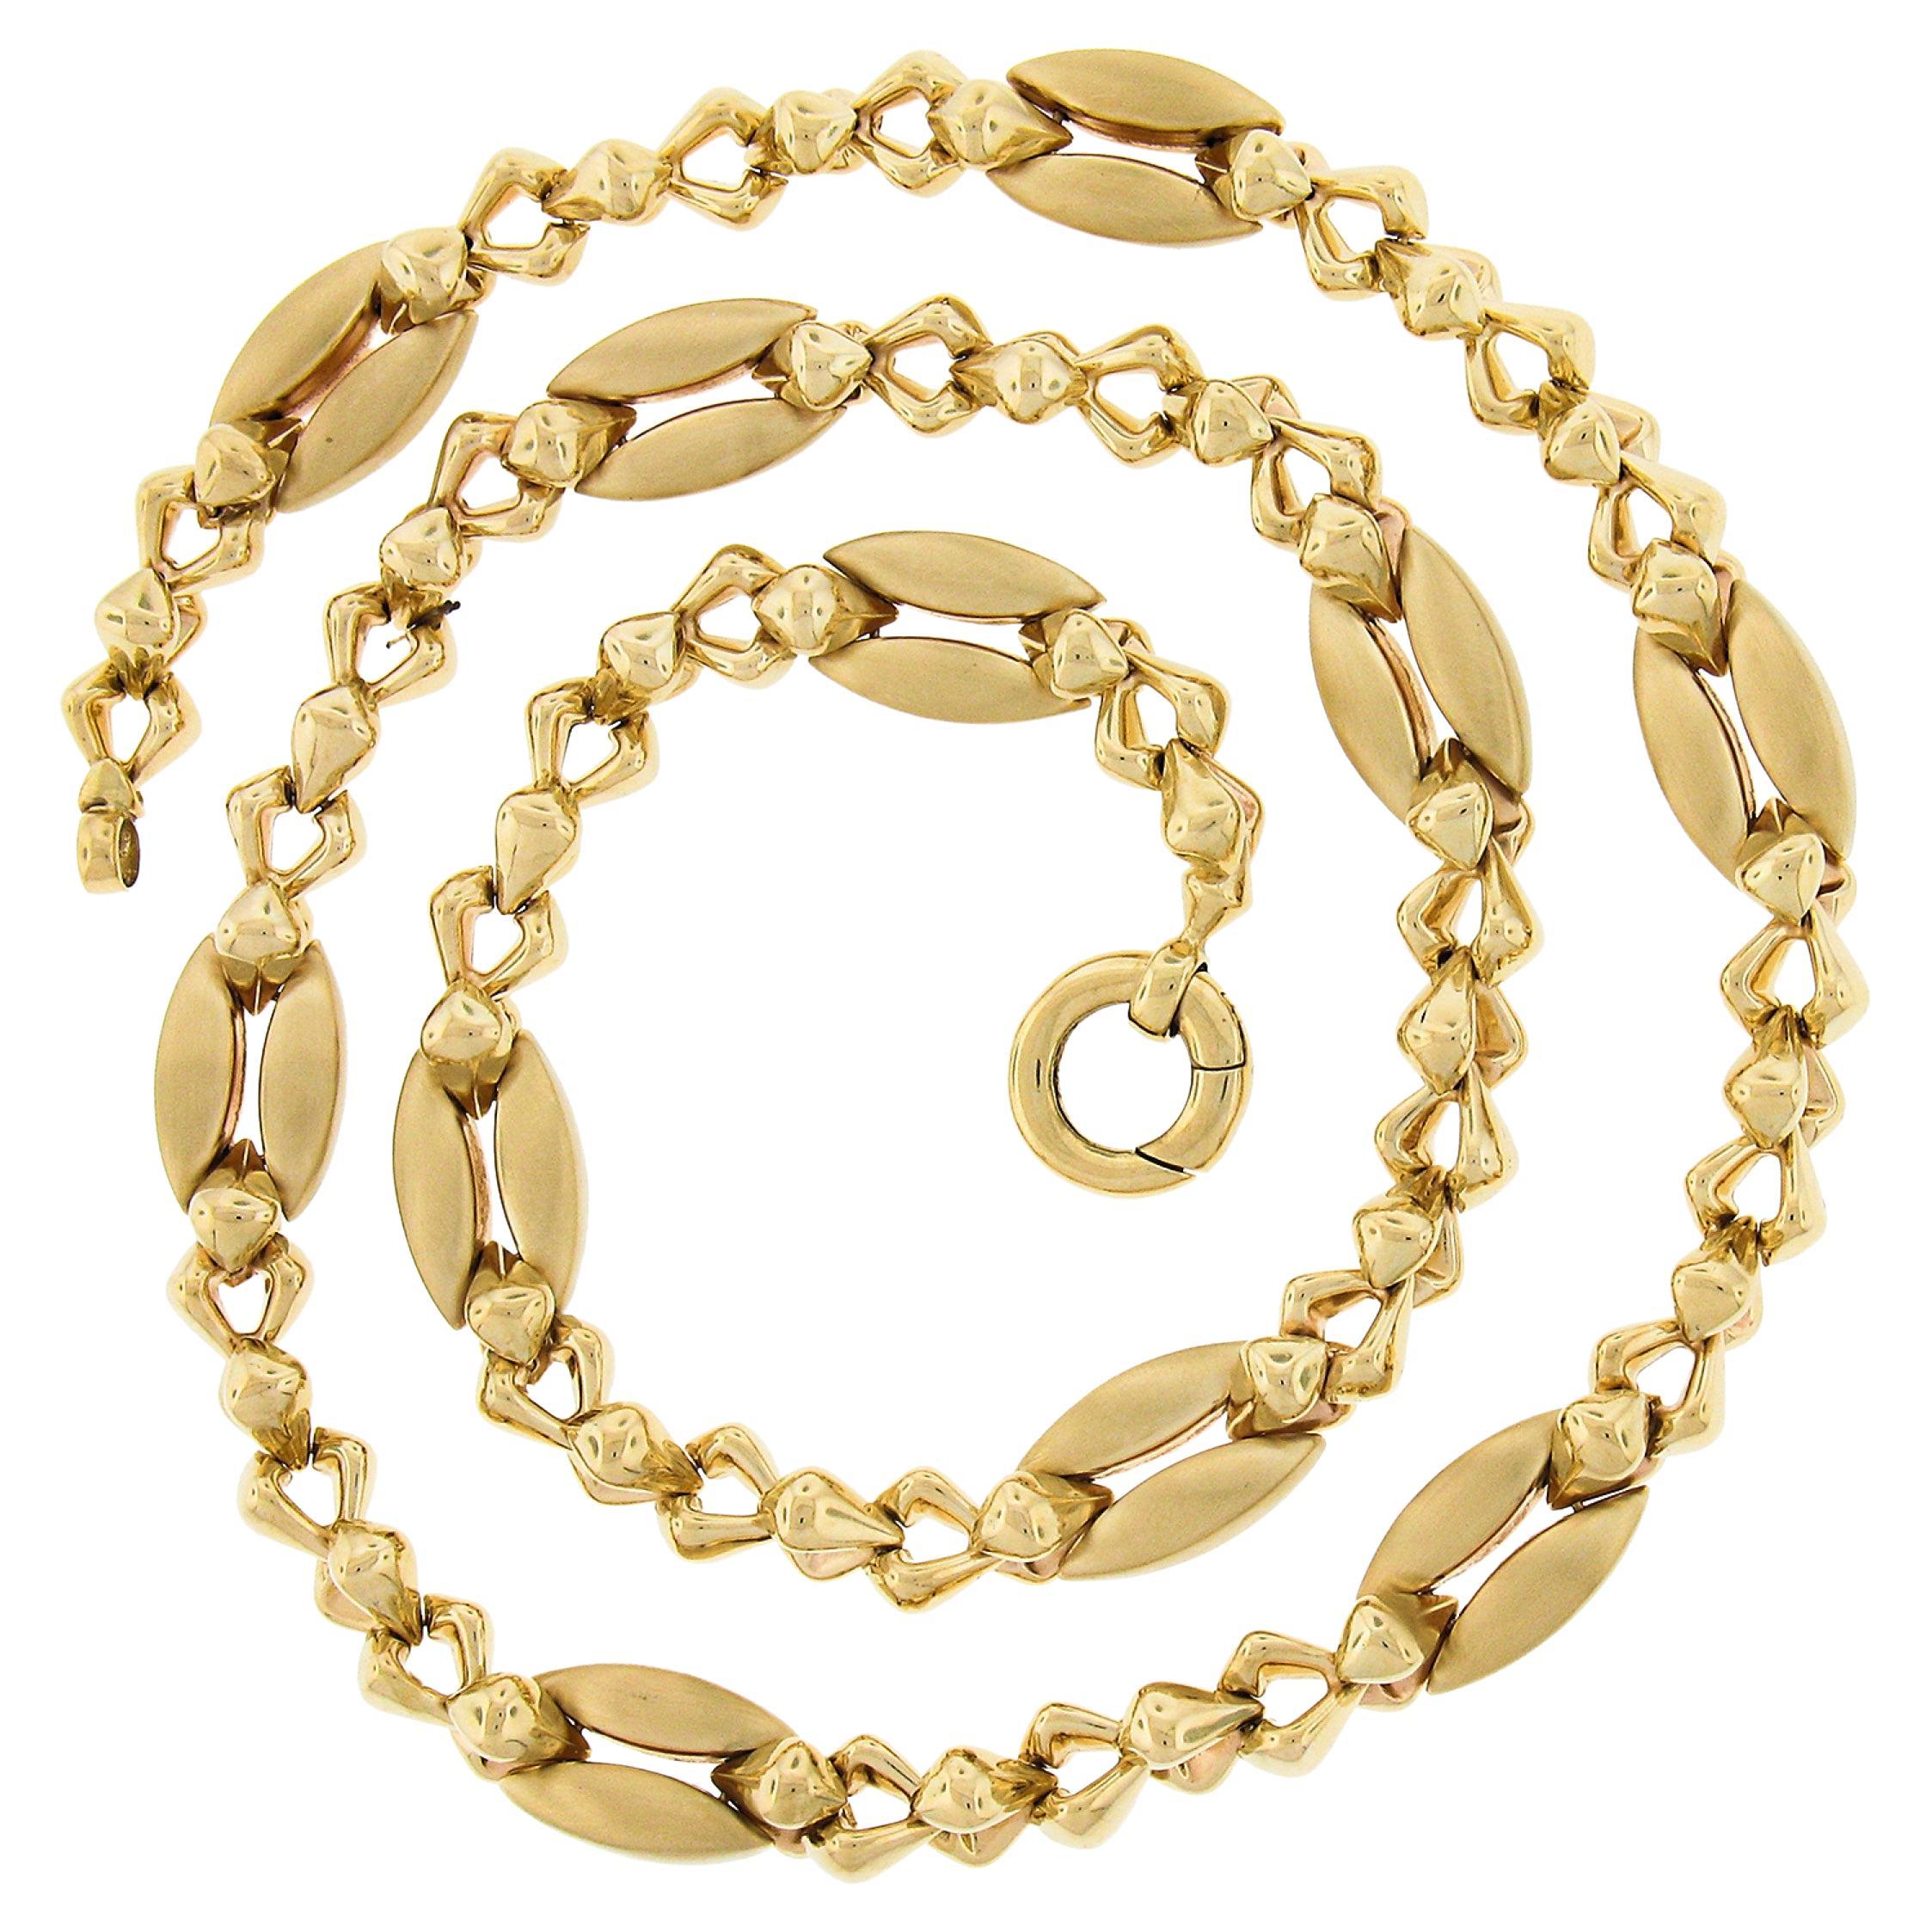 Fancy 14K Gold lange abwechselnd poliert & gebürstet Sektionen Link Kette Halskette